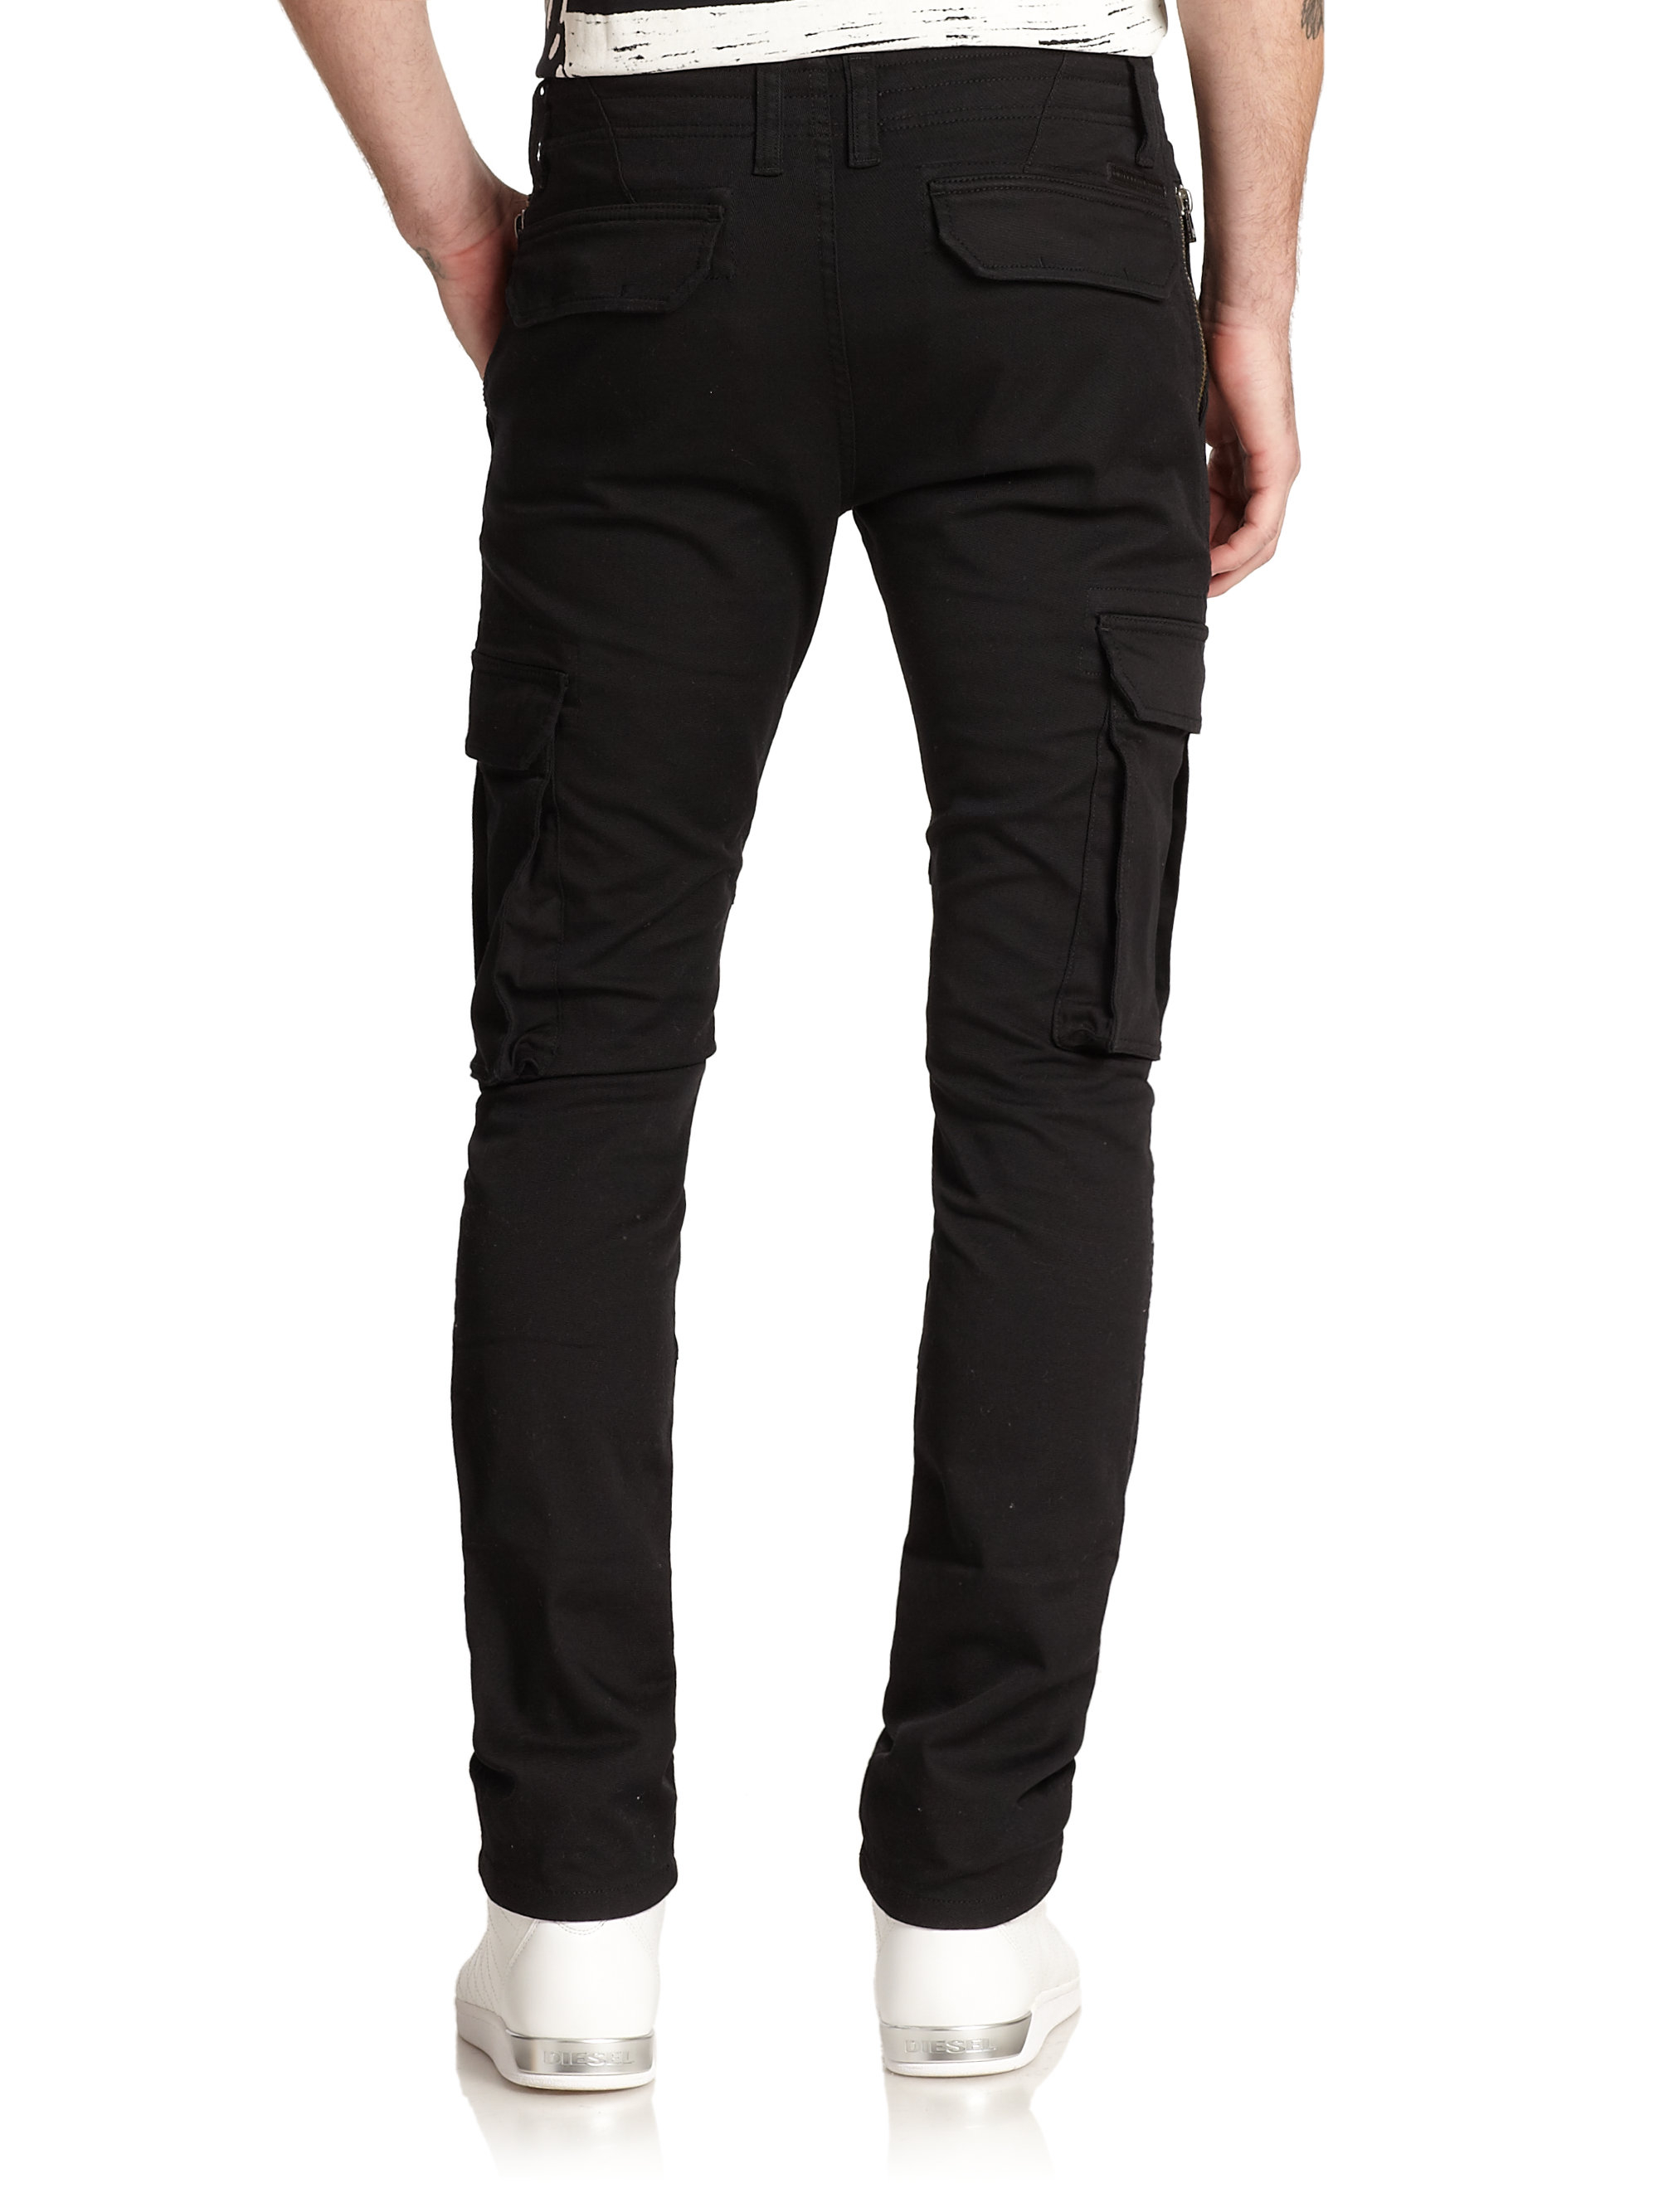 Lyst - Diesel Black Gold Slim Cotton Twill Cargo Pants in Black for Men